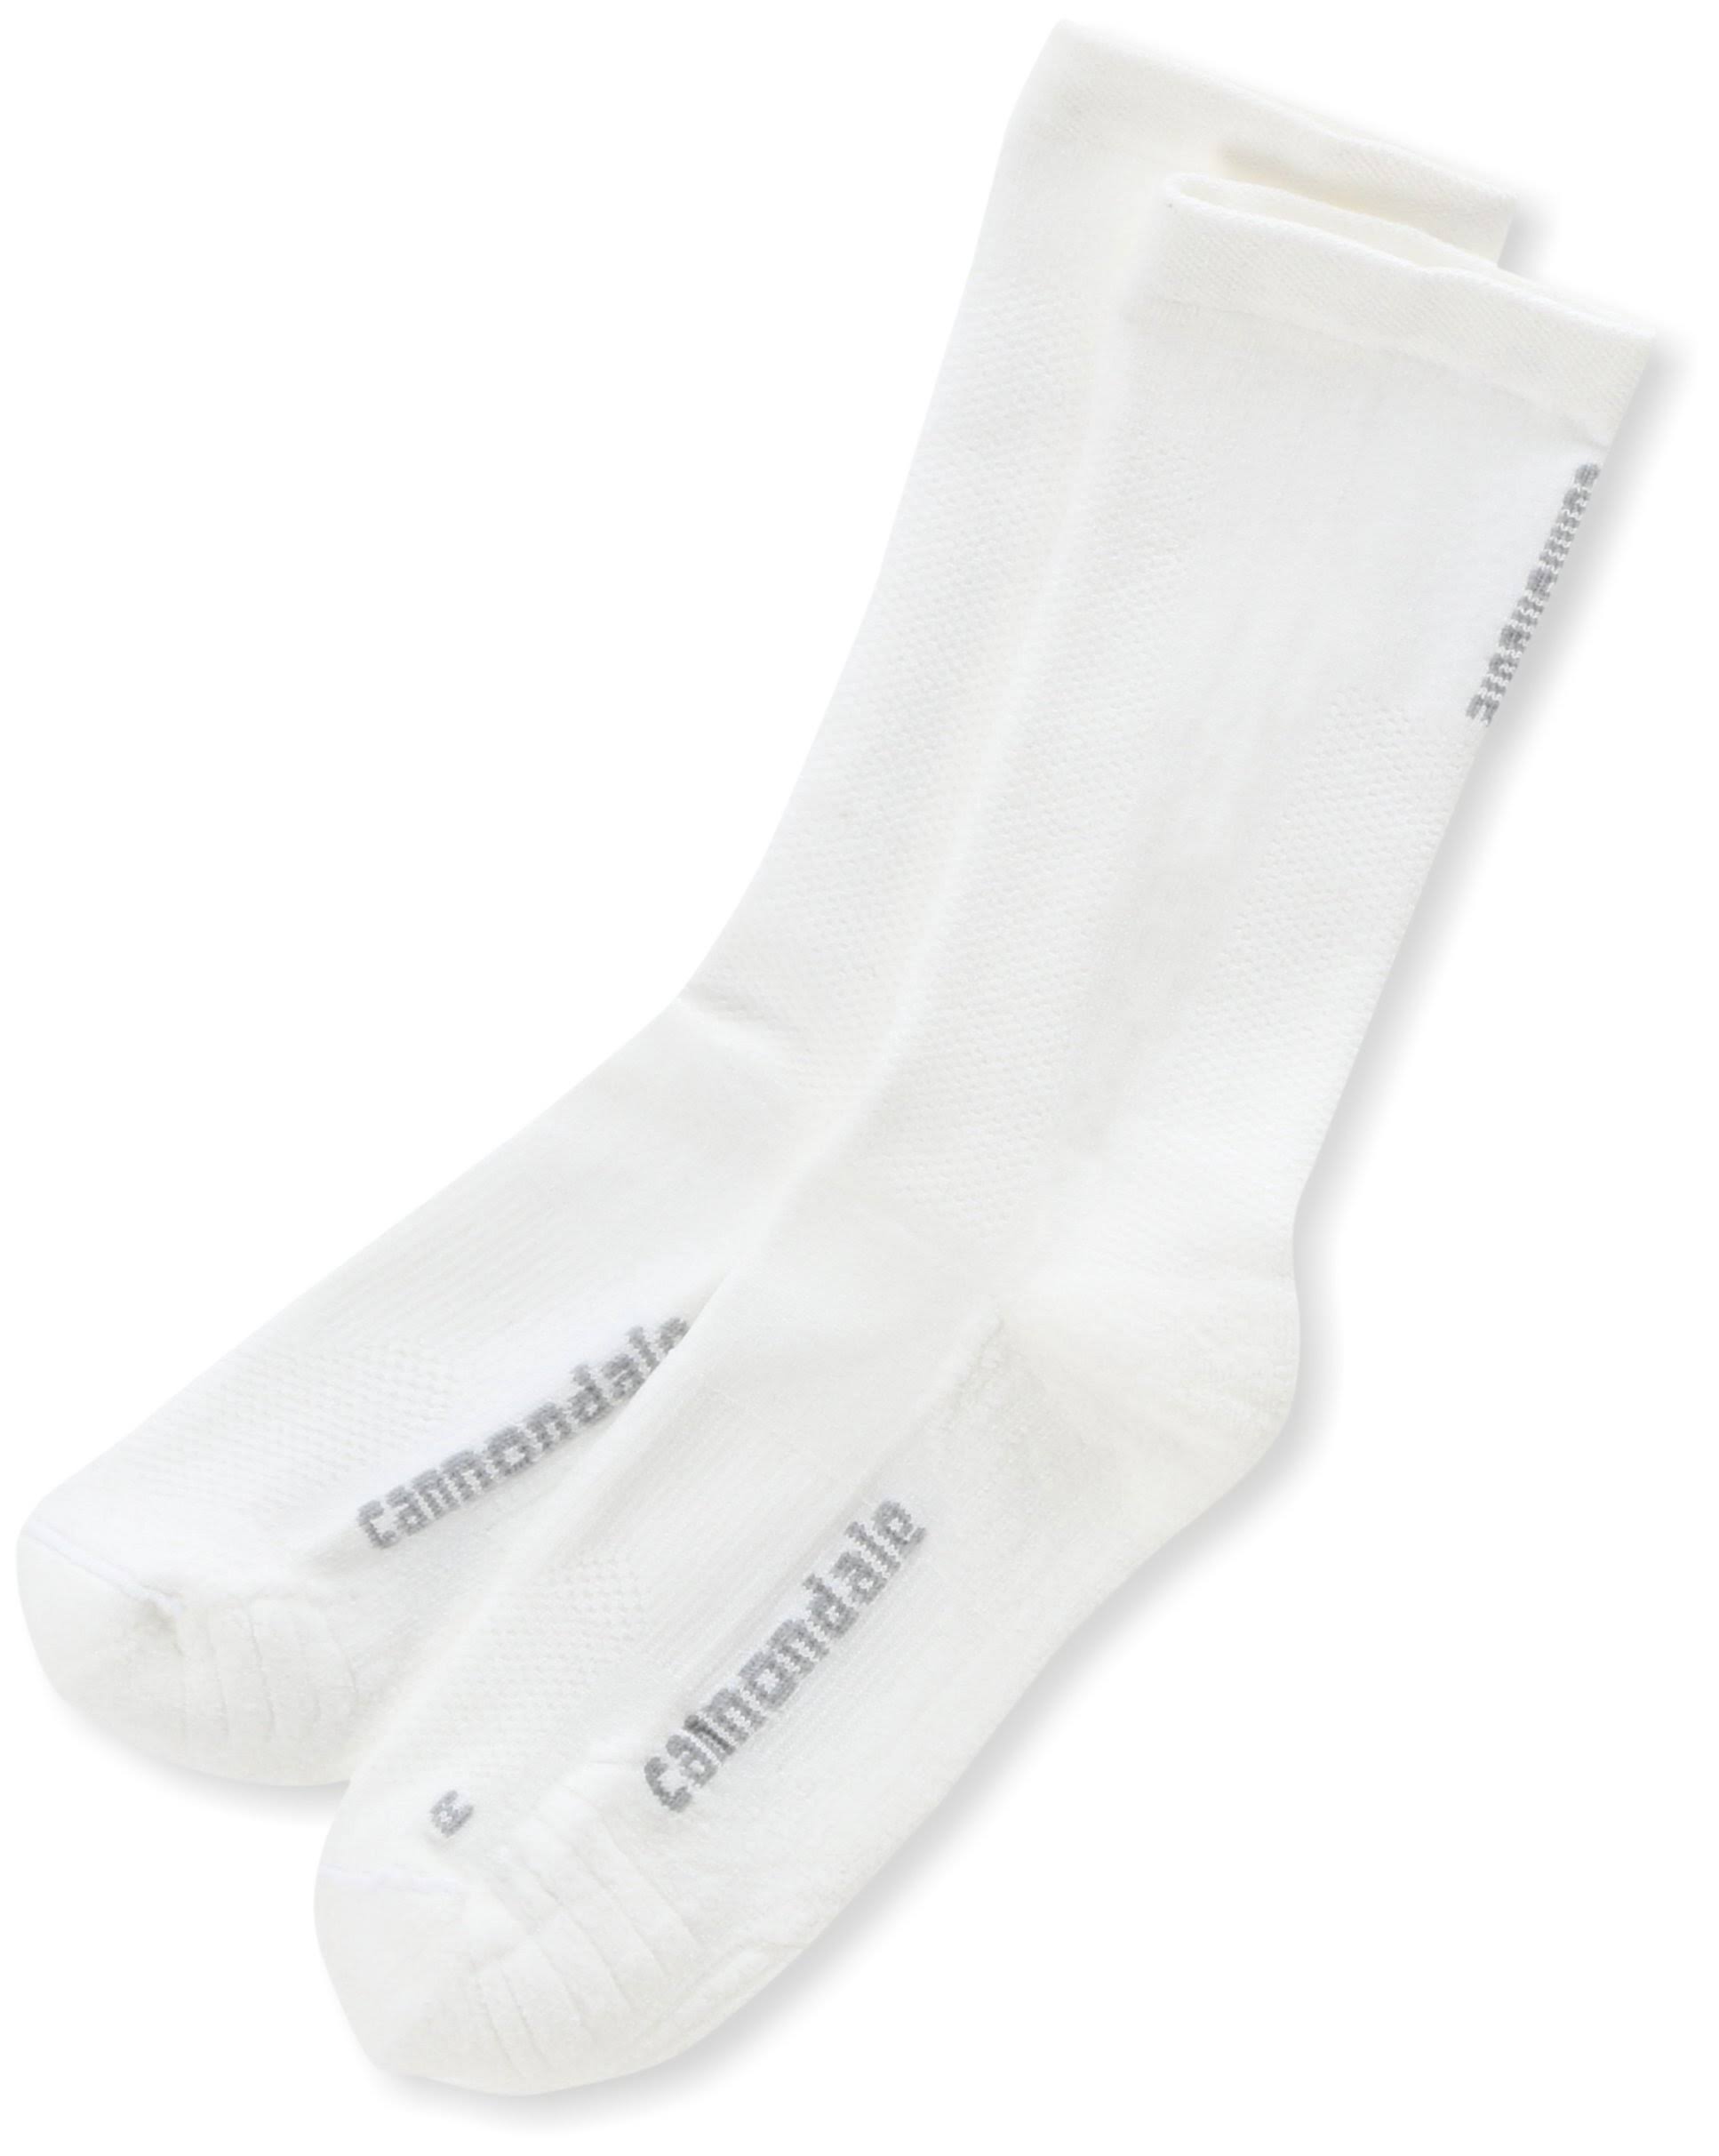 Cannondale Men's High Socks, White, Small